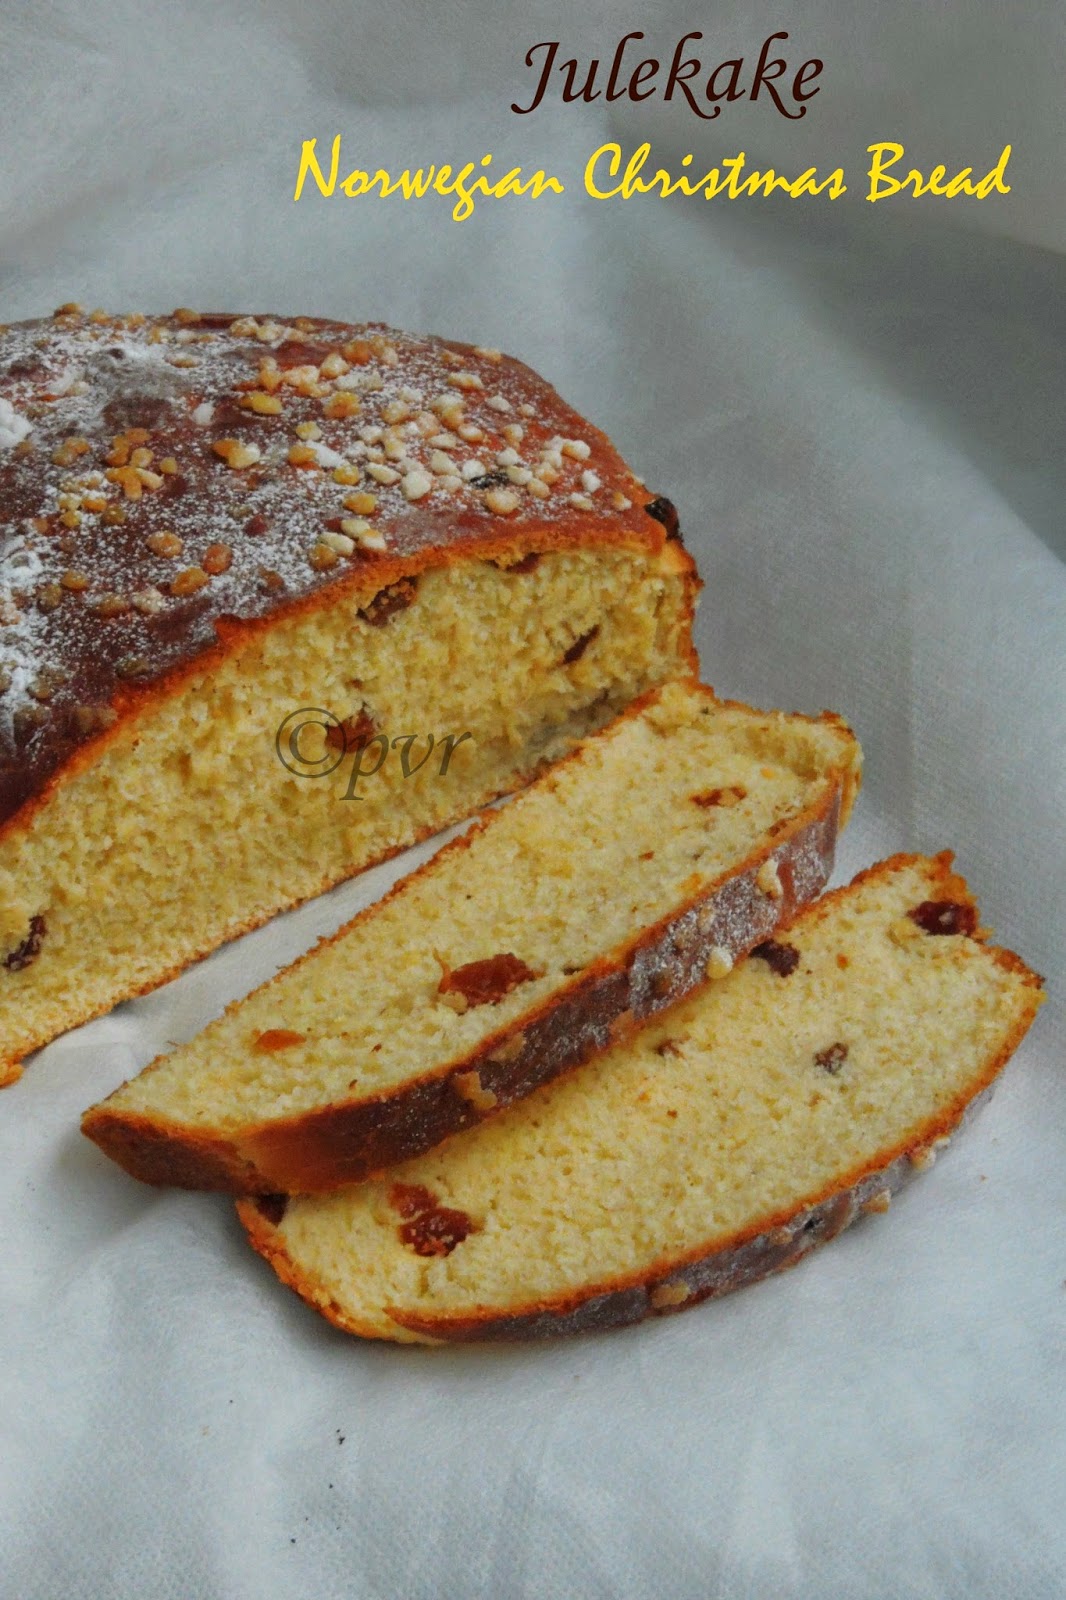 Julekake - A Norwegian Christmas Bread